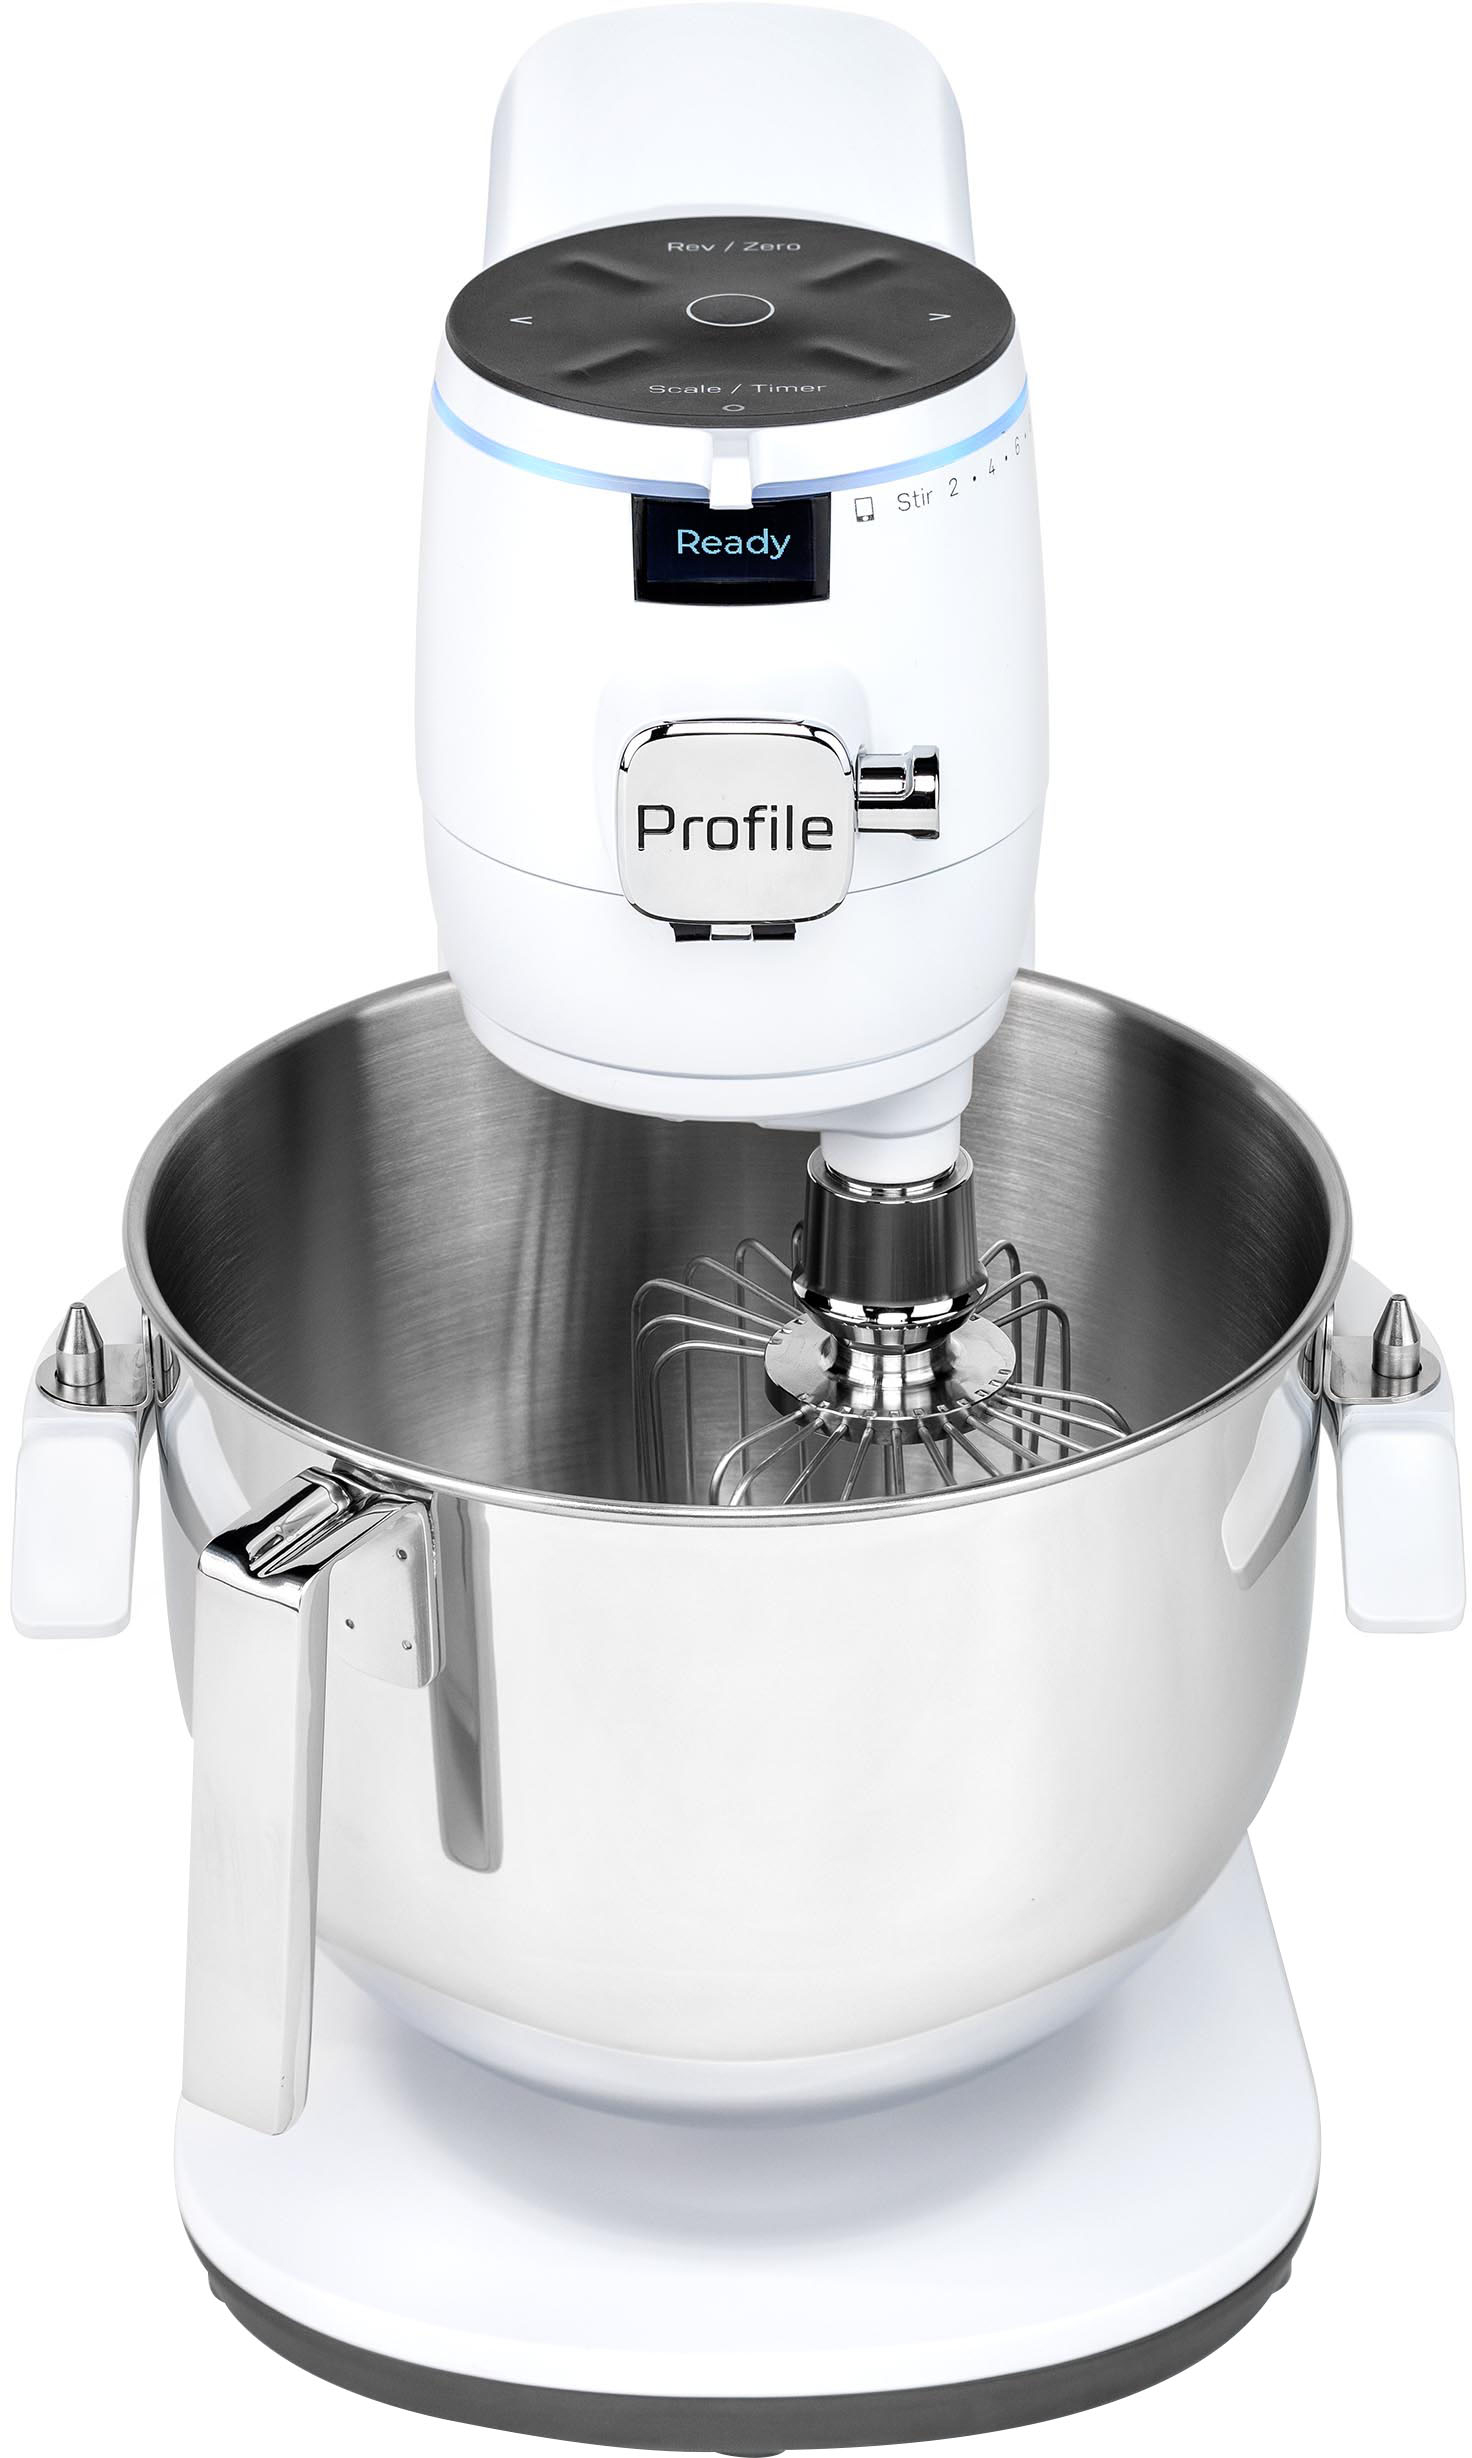 GE Profile - 7 Quart Bowl- Smart Stand Mixer with Auto Sense - Stone White